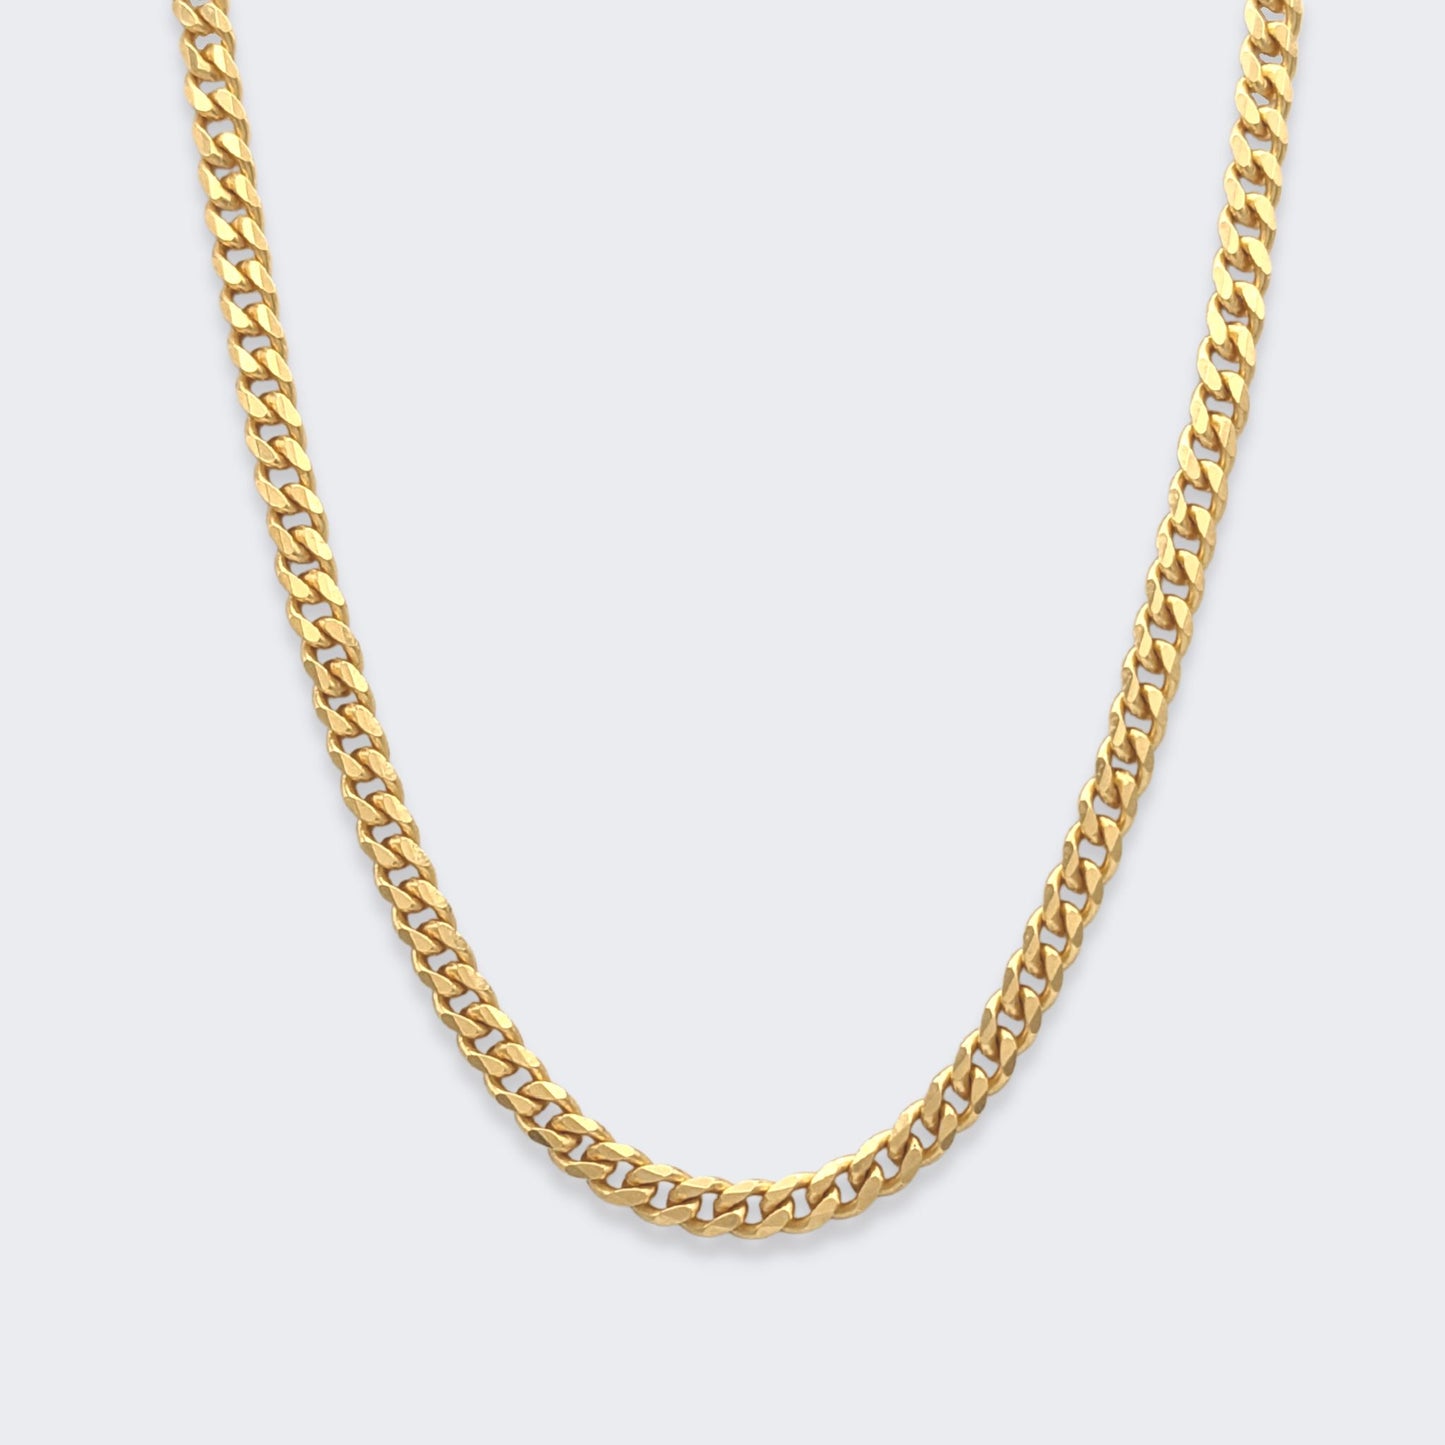 mars dog bone necklace in 18k gold vermeil chain detail view